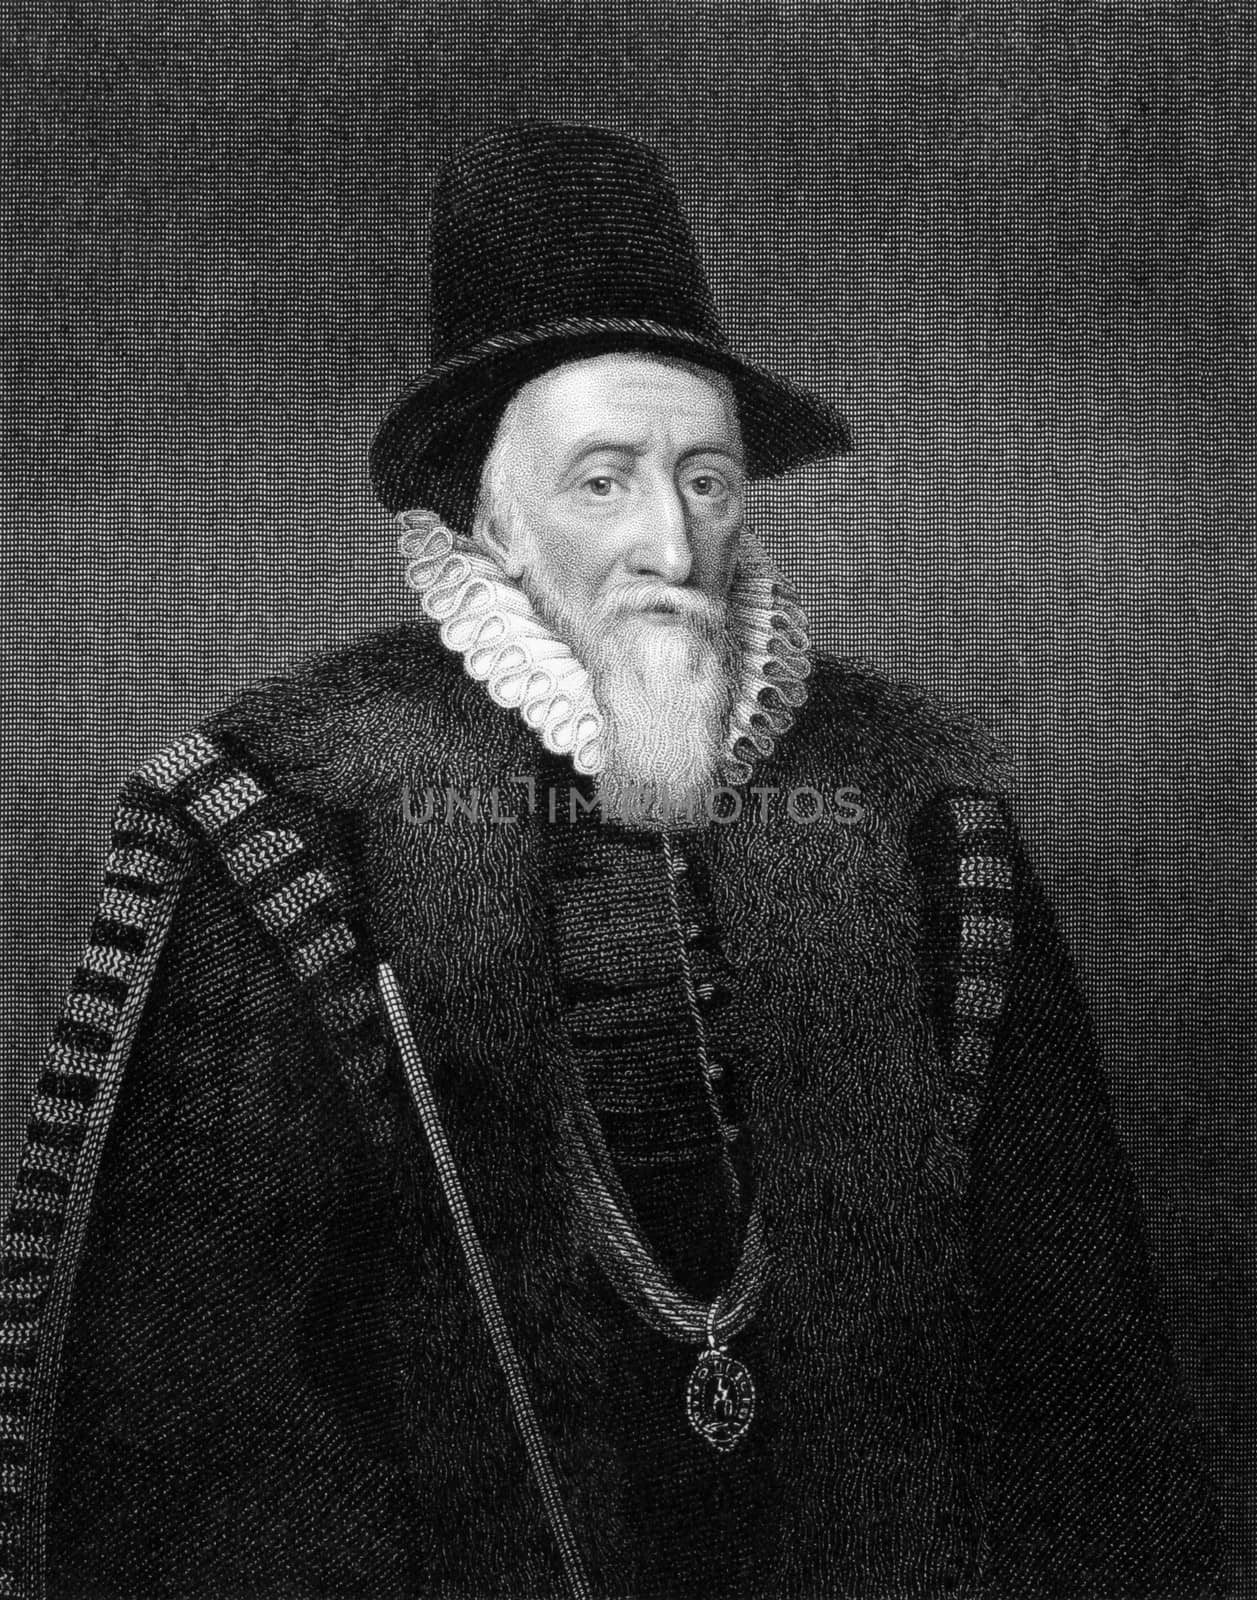 Thomas Sackville, 1st Earl of Dorset by Georgios